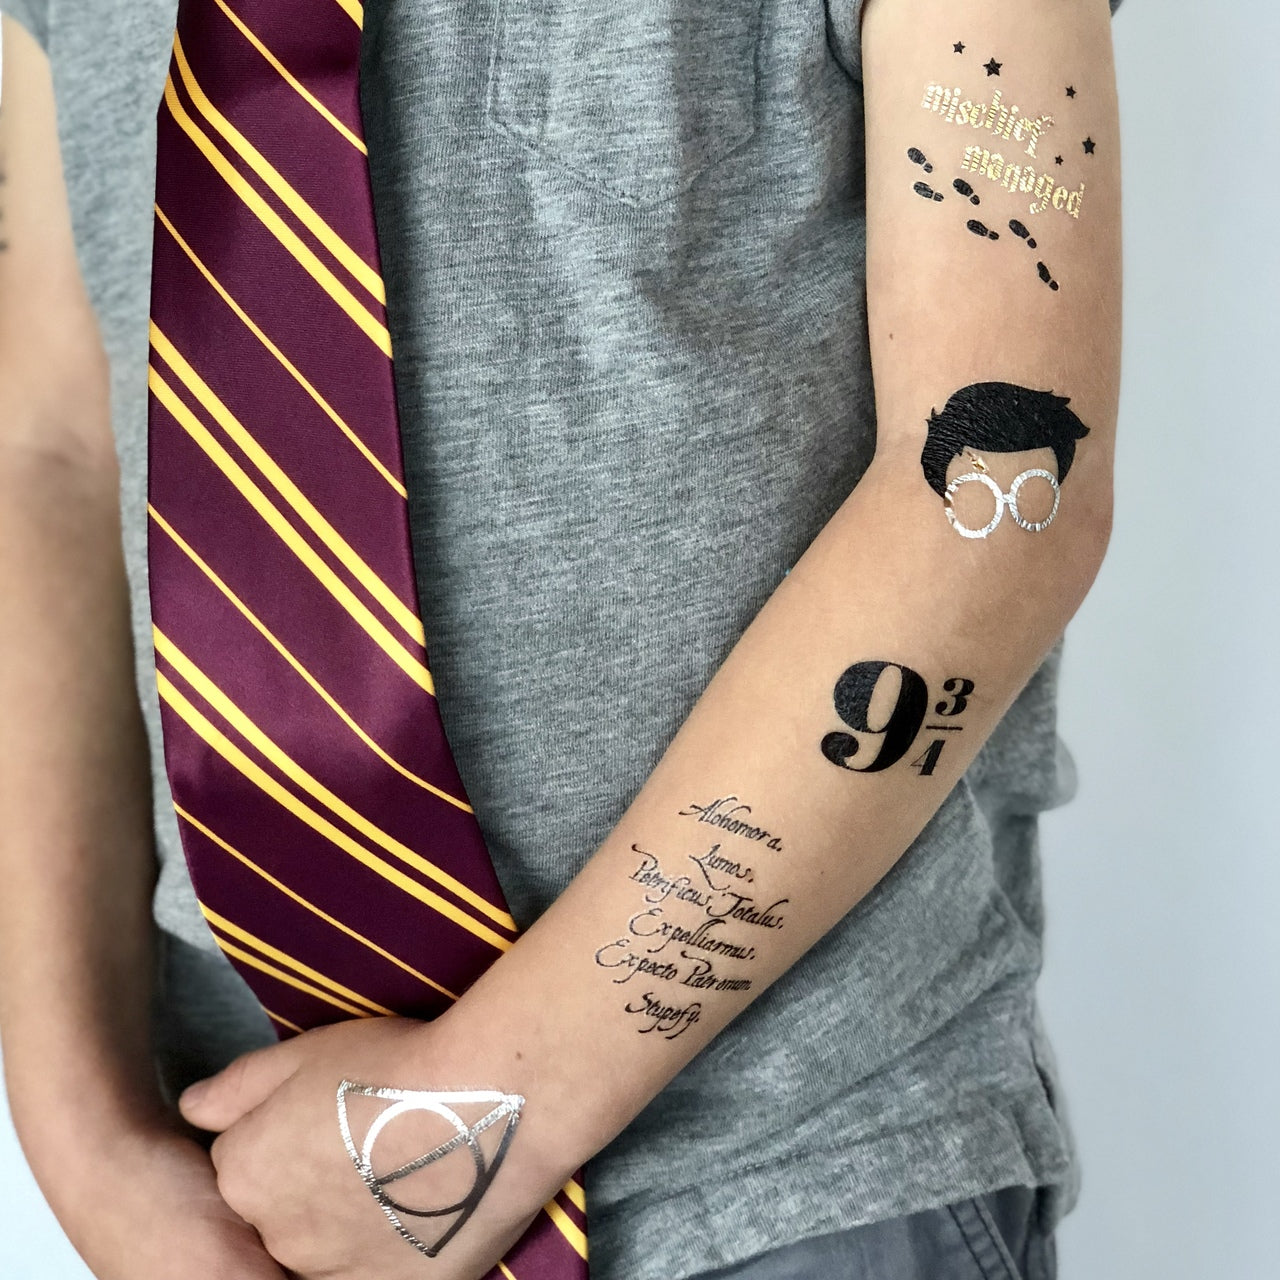 Harry potter tattoo flash by BrutalityRythm on DeviantArt